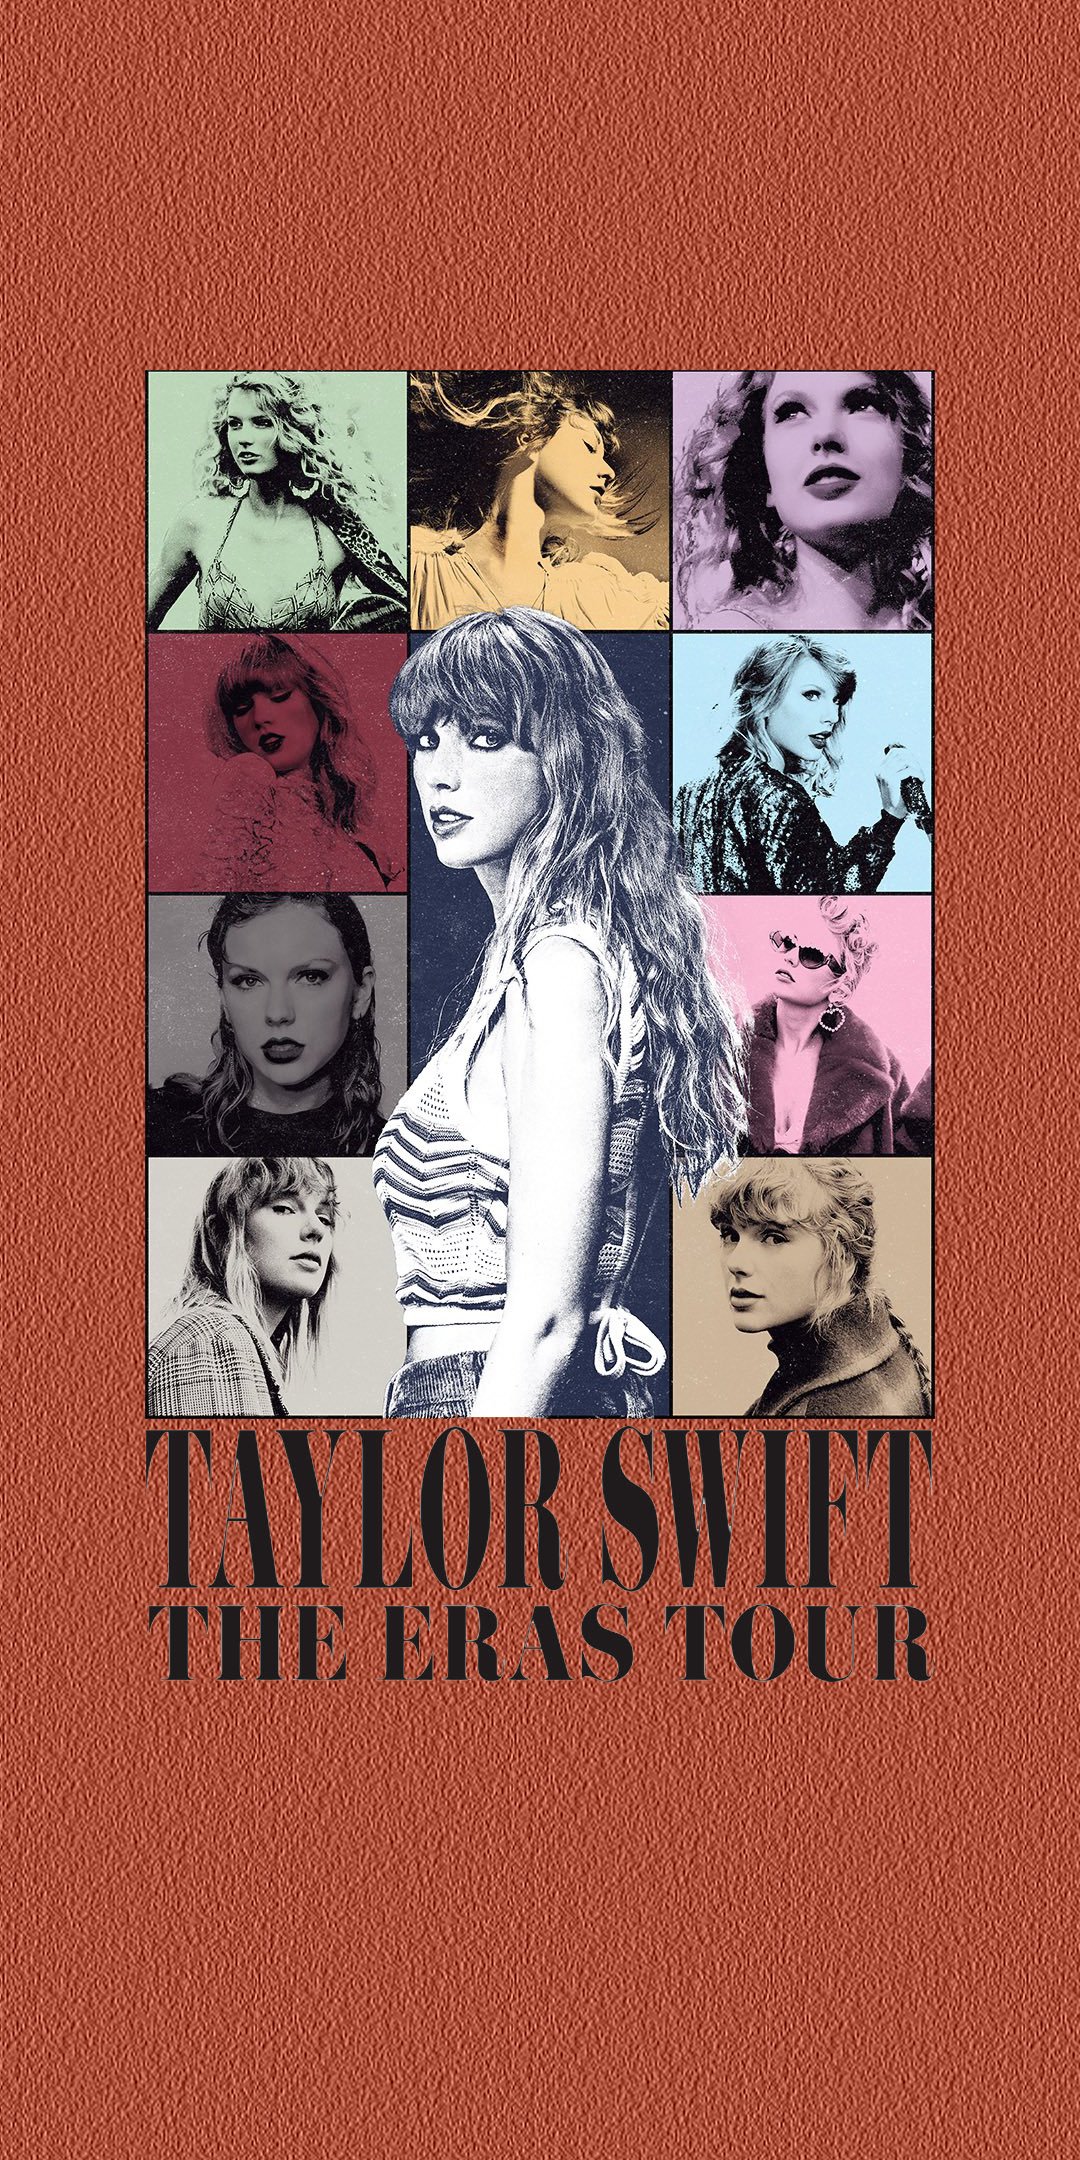 Taylor Swift Eras Tour Wallpapers Wallpaper Cave